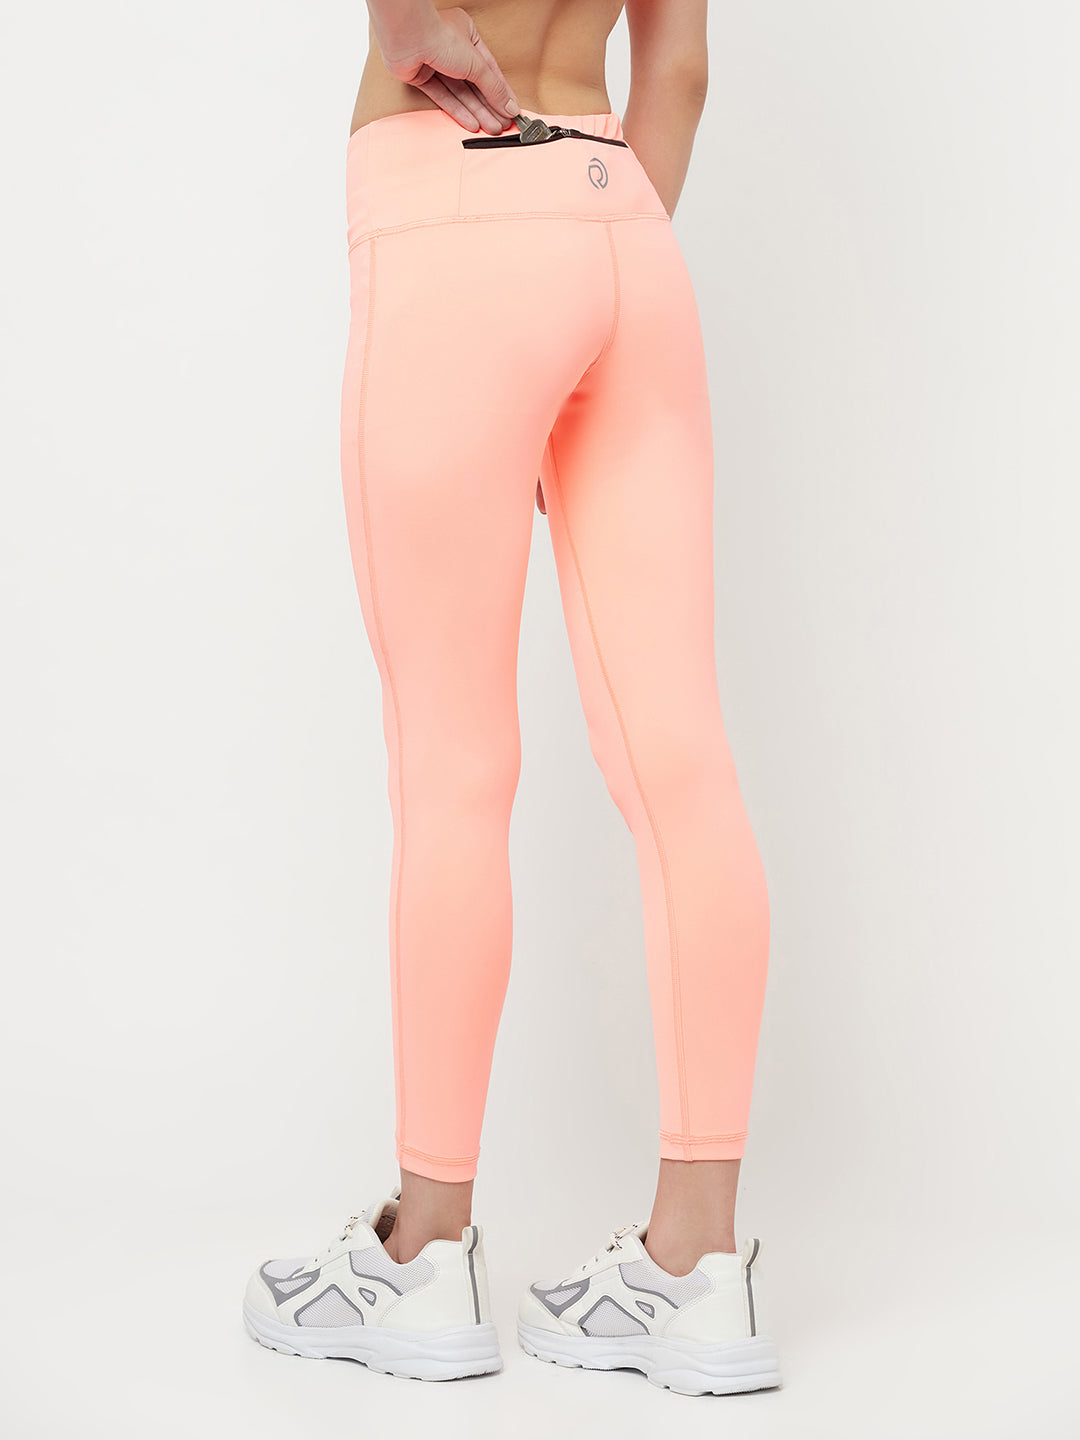 Phone pocket leggings & sports bra combo - Women's Pastel Pink – TRUEREVO